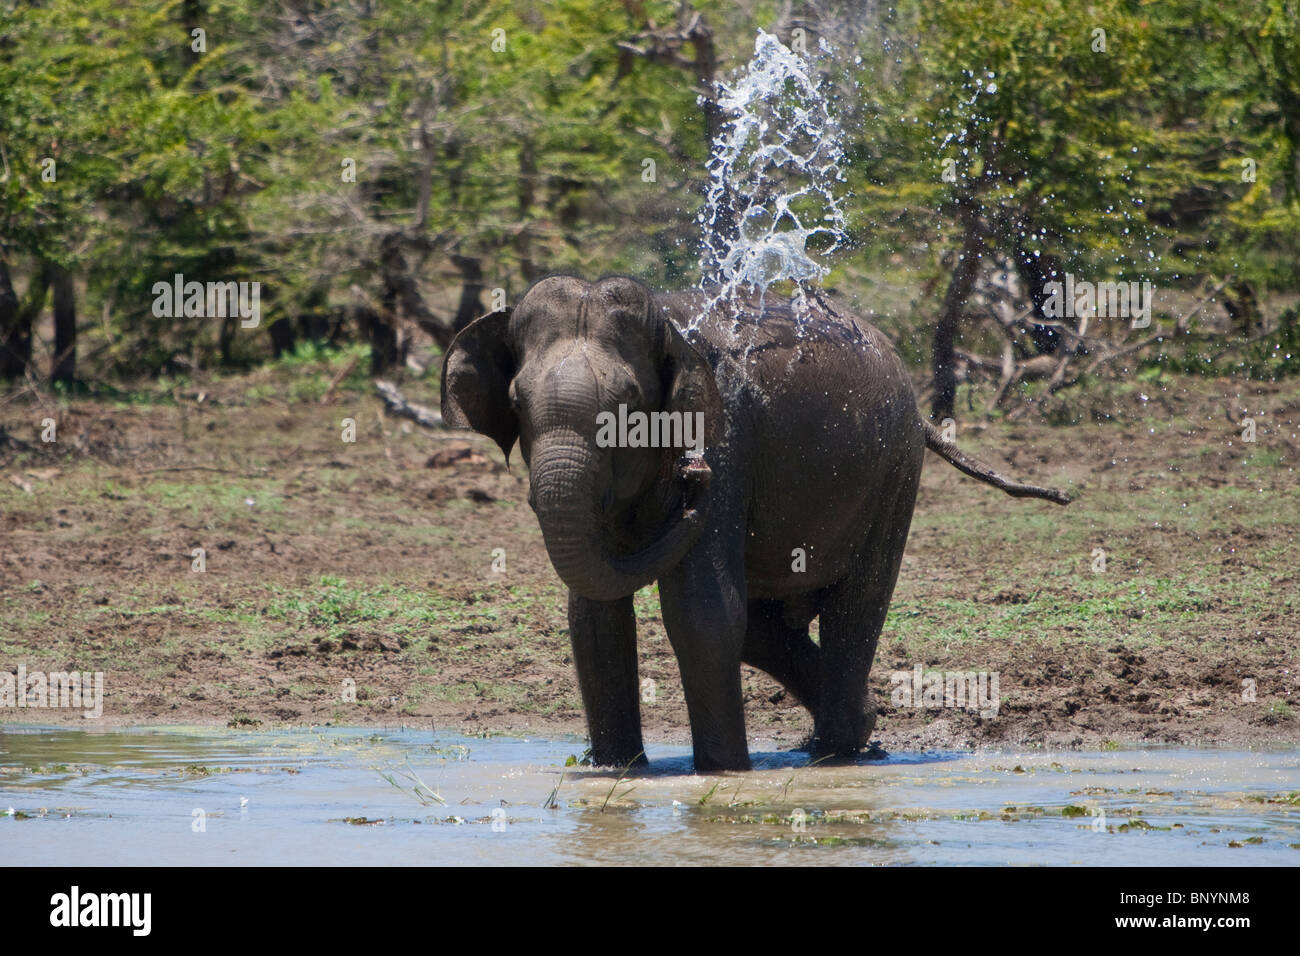 Elefante asiatico, Elephas maximus, Indischer Elefante, bull acqua potabile e di balneazione a waterhole in Yala National Park, Sri Lanka Foto Stock